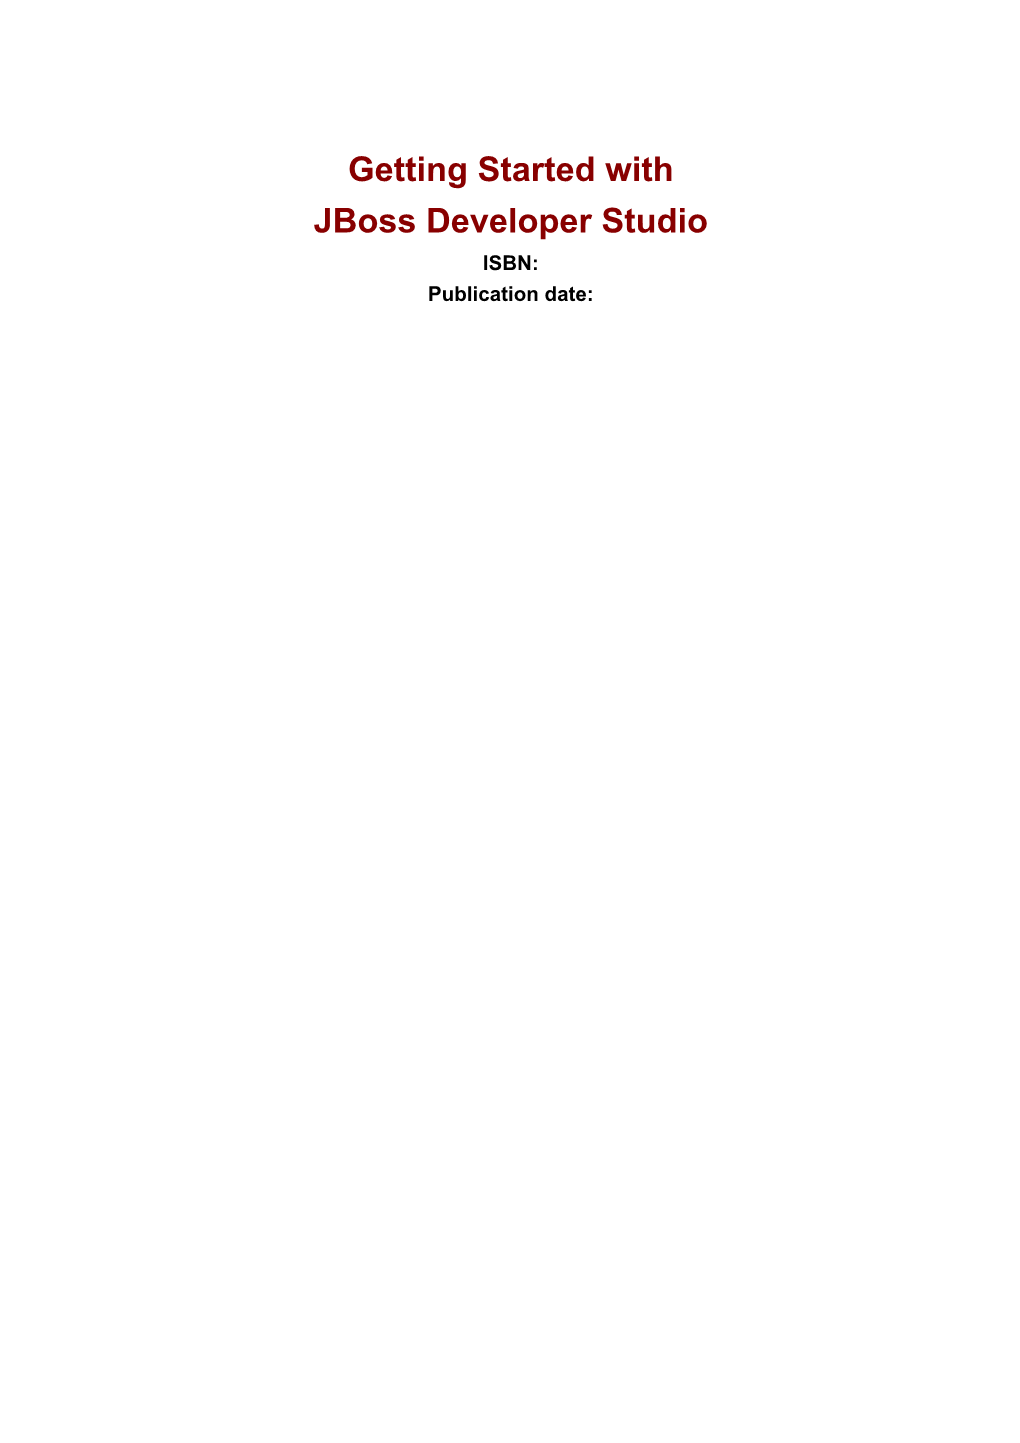 Getting Started with Jboss Developer Studio ISBN: Publication Date: Getting Started with Jboss Developer Studio